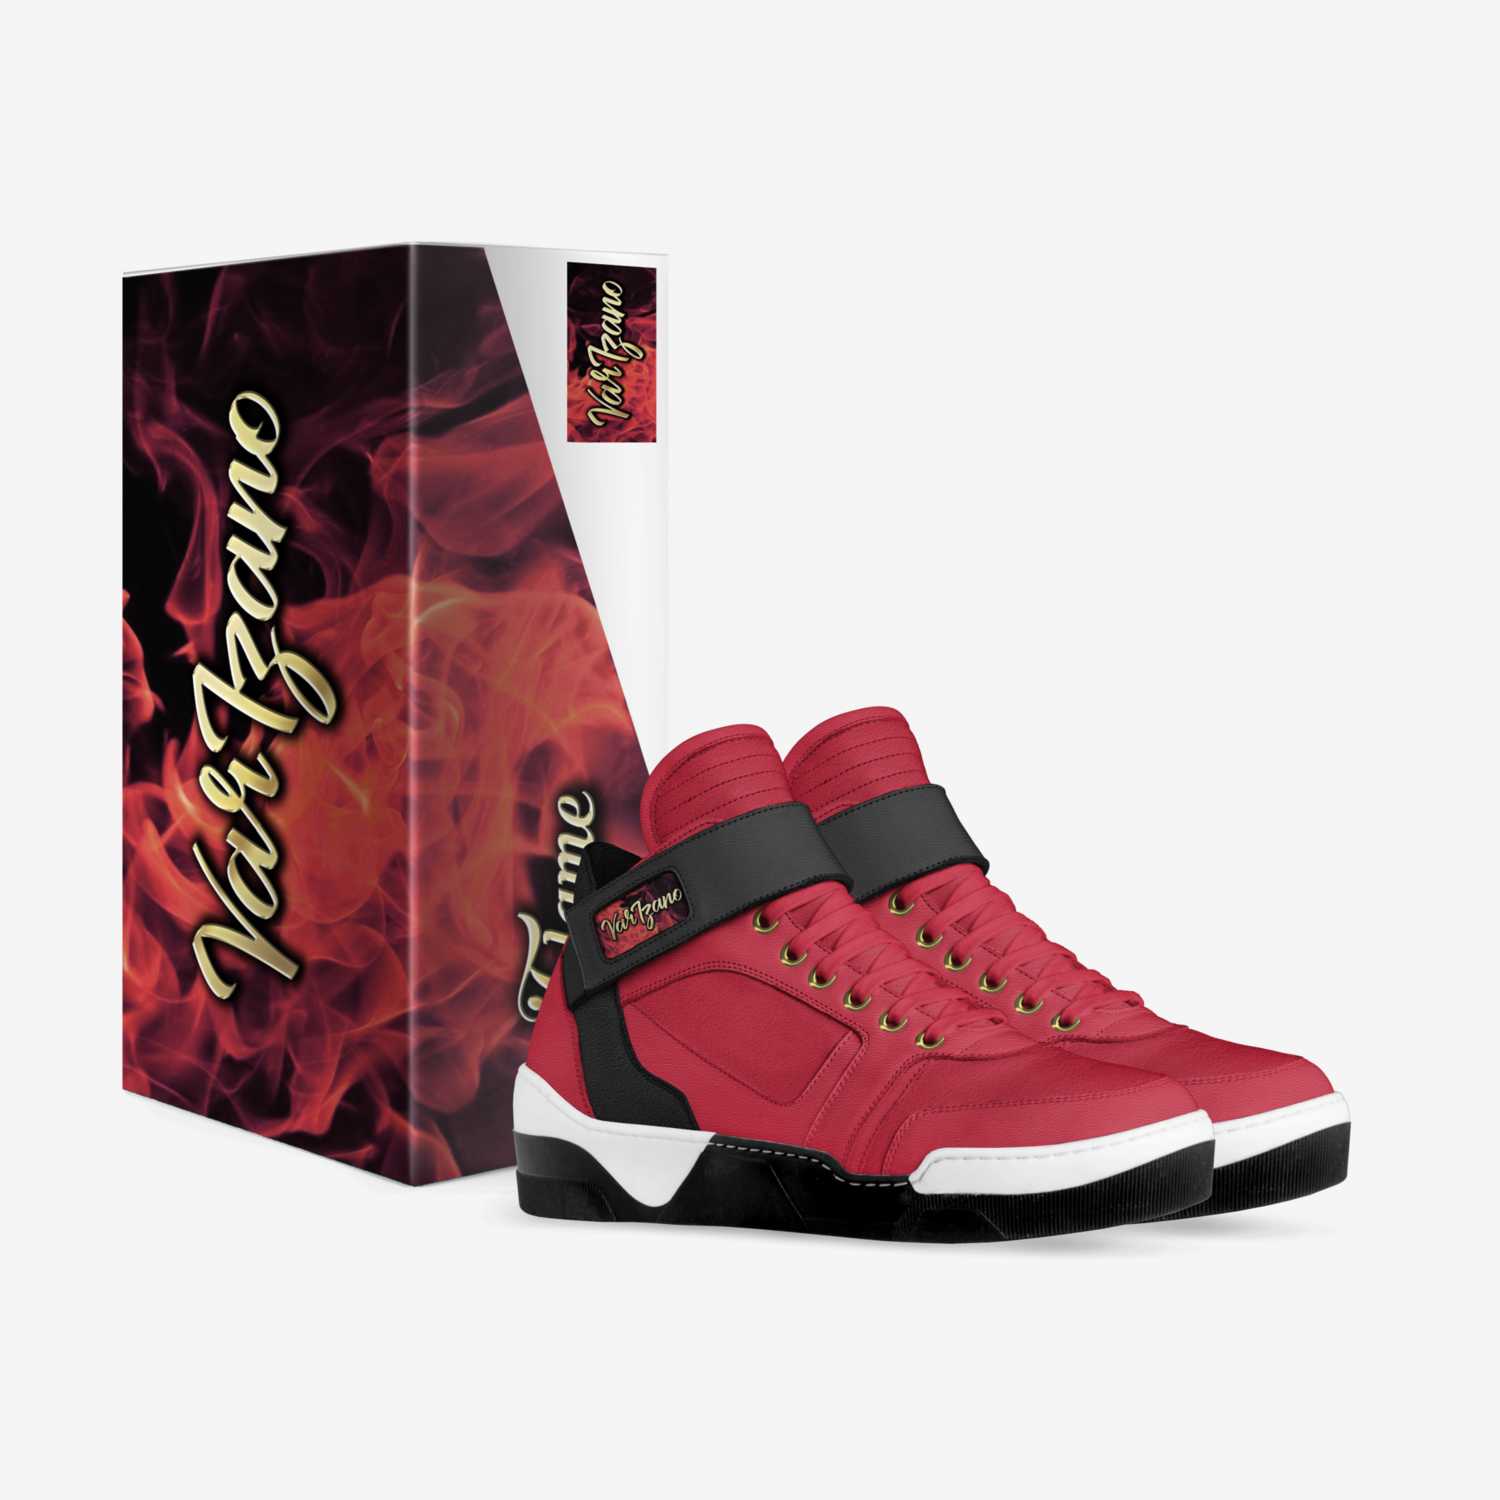 Varizano Flamez custom made in Italy shoes by Varizano | Box view